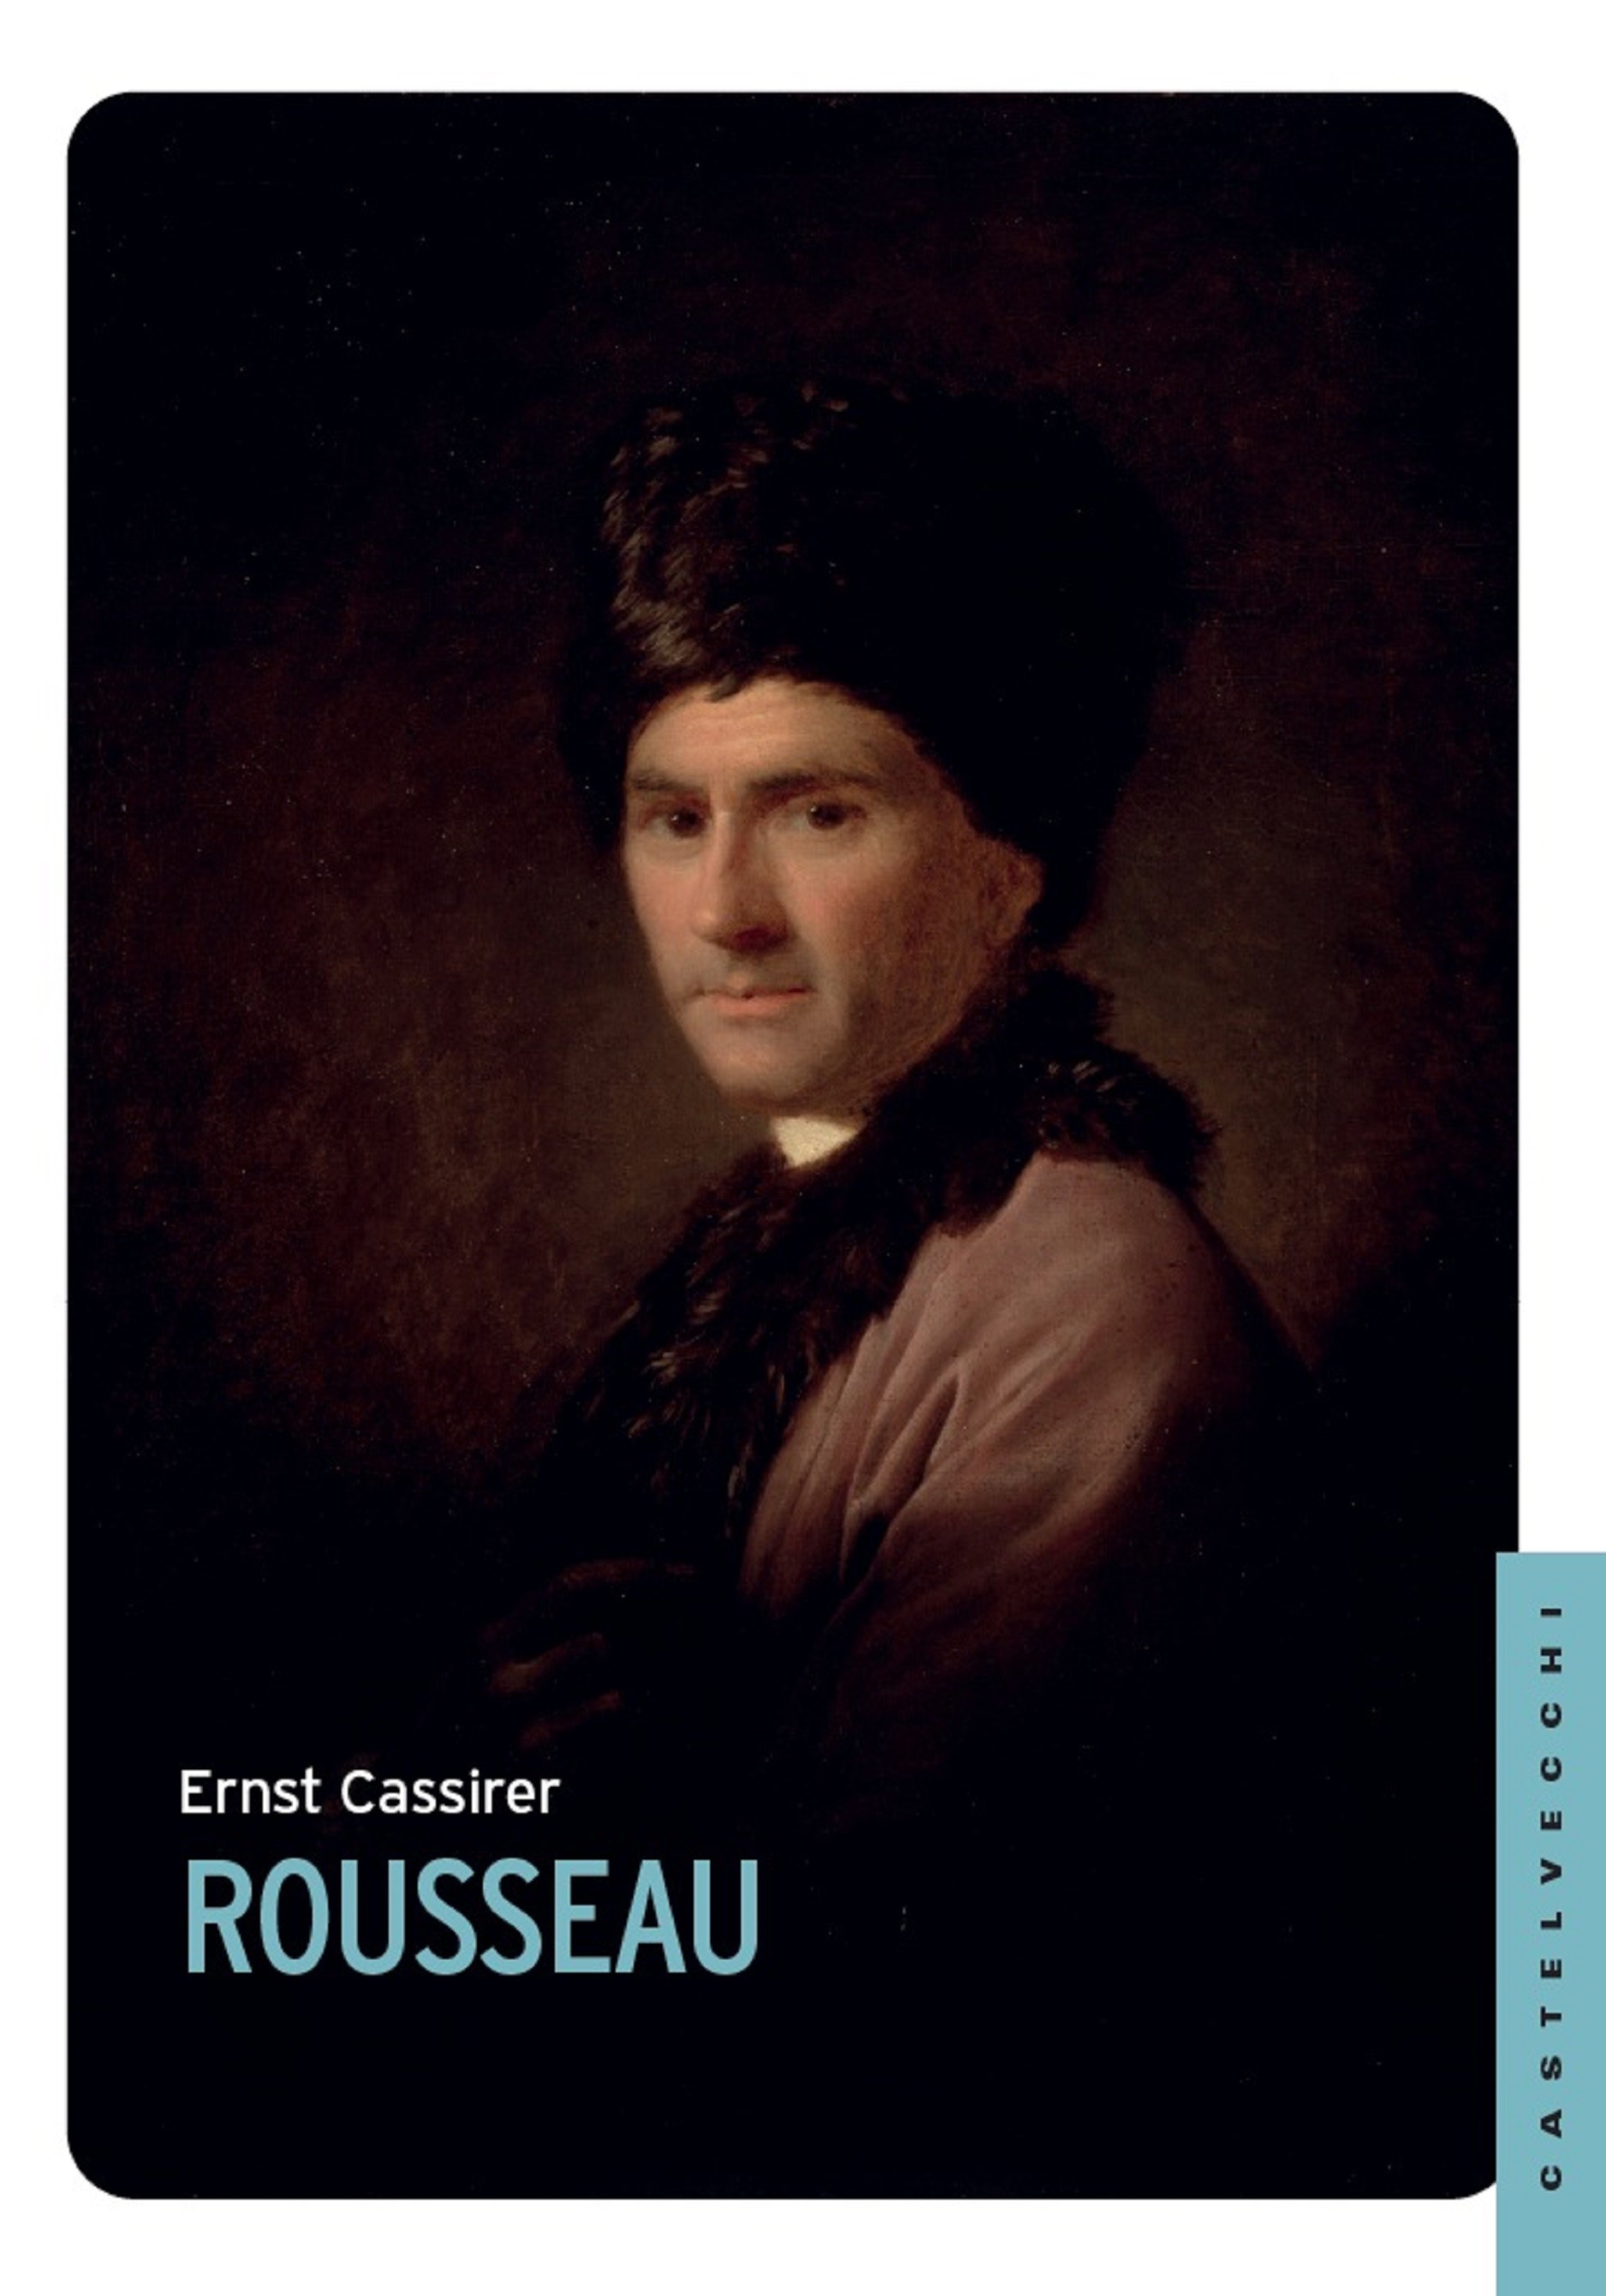 Rousseau - Librerie.coop